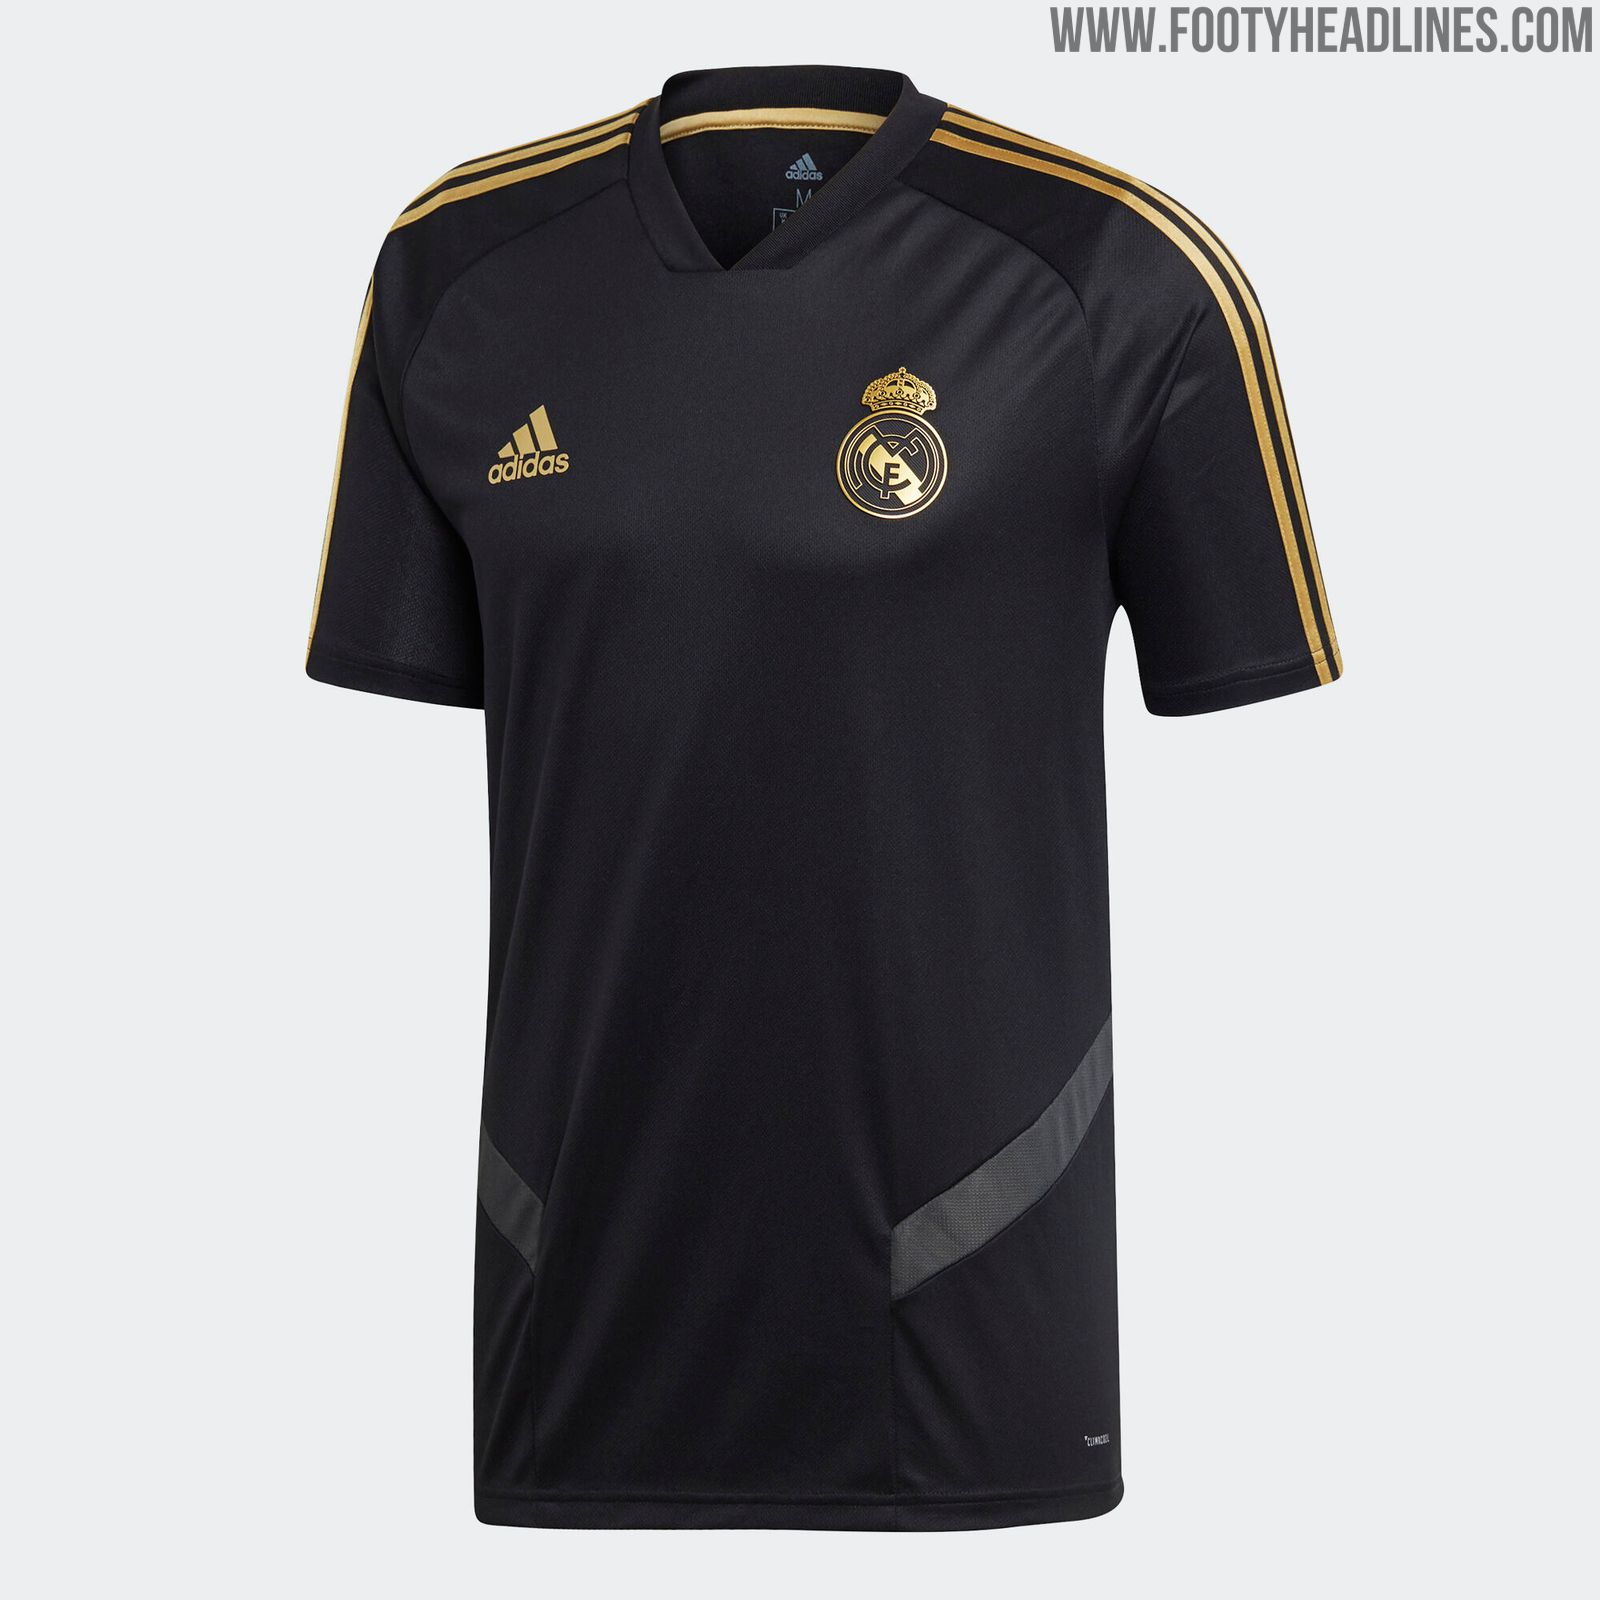 Real Madrid 19-20 Home Kit Released - Footy Headlines